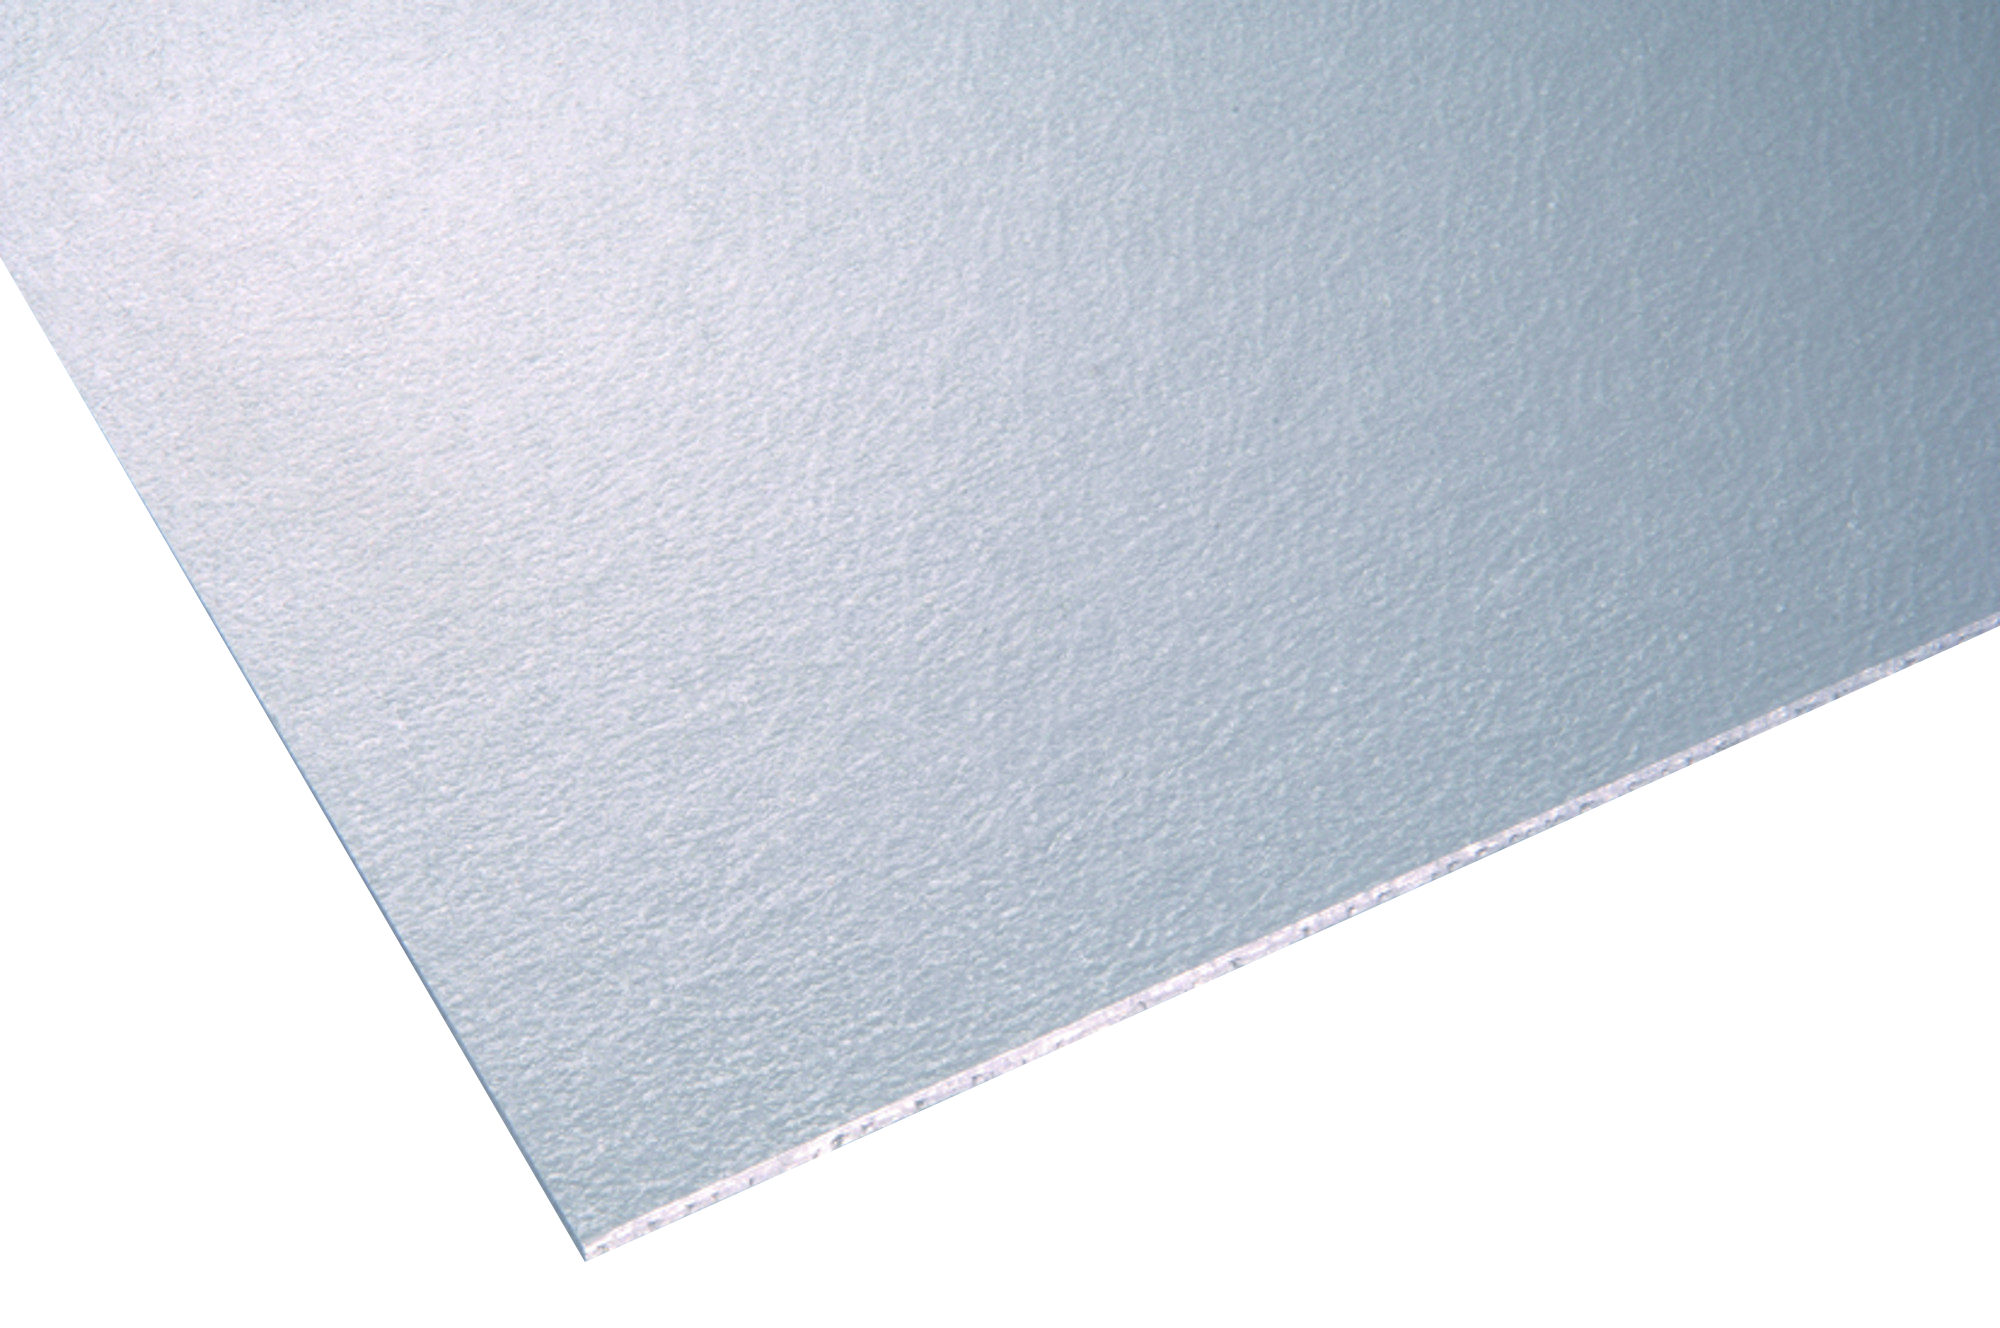 Metacrilato transparente relieve de 5 mm de grosor 100x50cm | Leroy